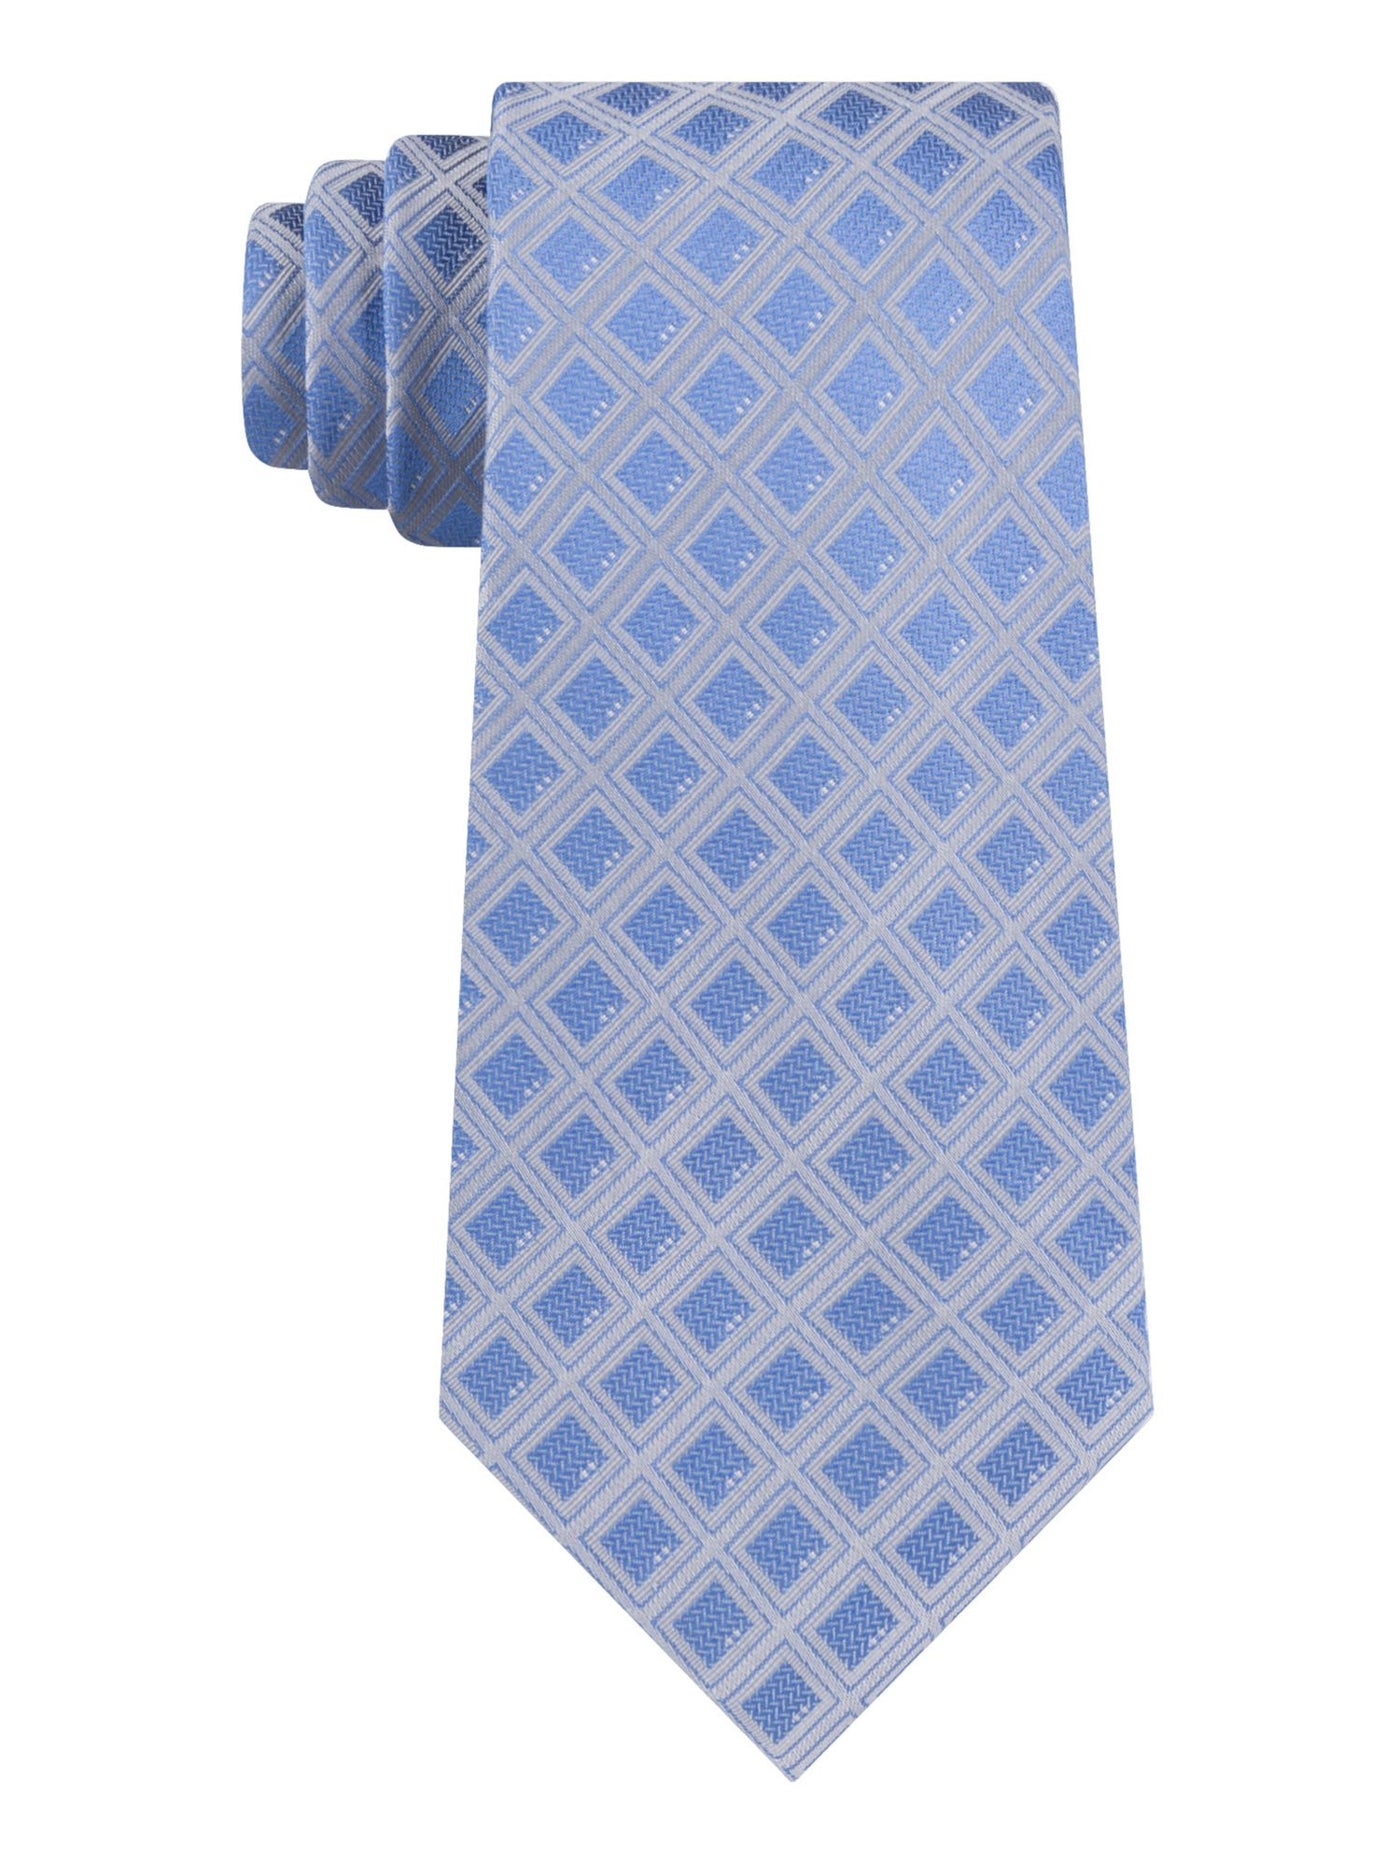 KENNETH COLE Mens Blue Dice Geometric Skinny Neck Tie